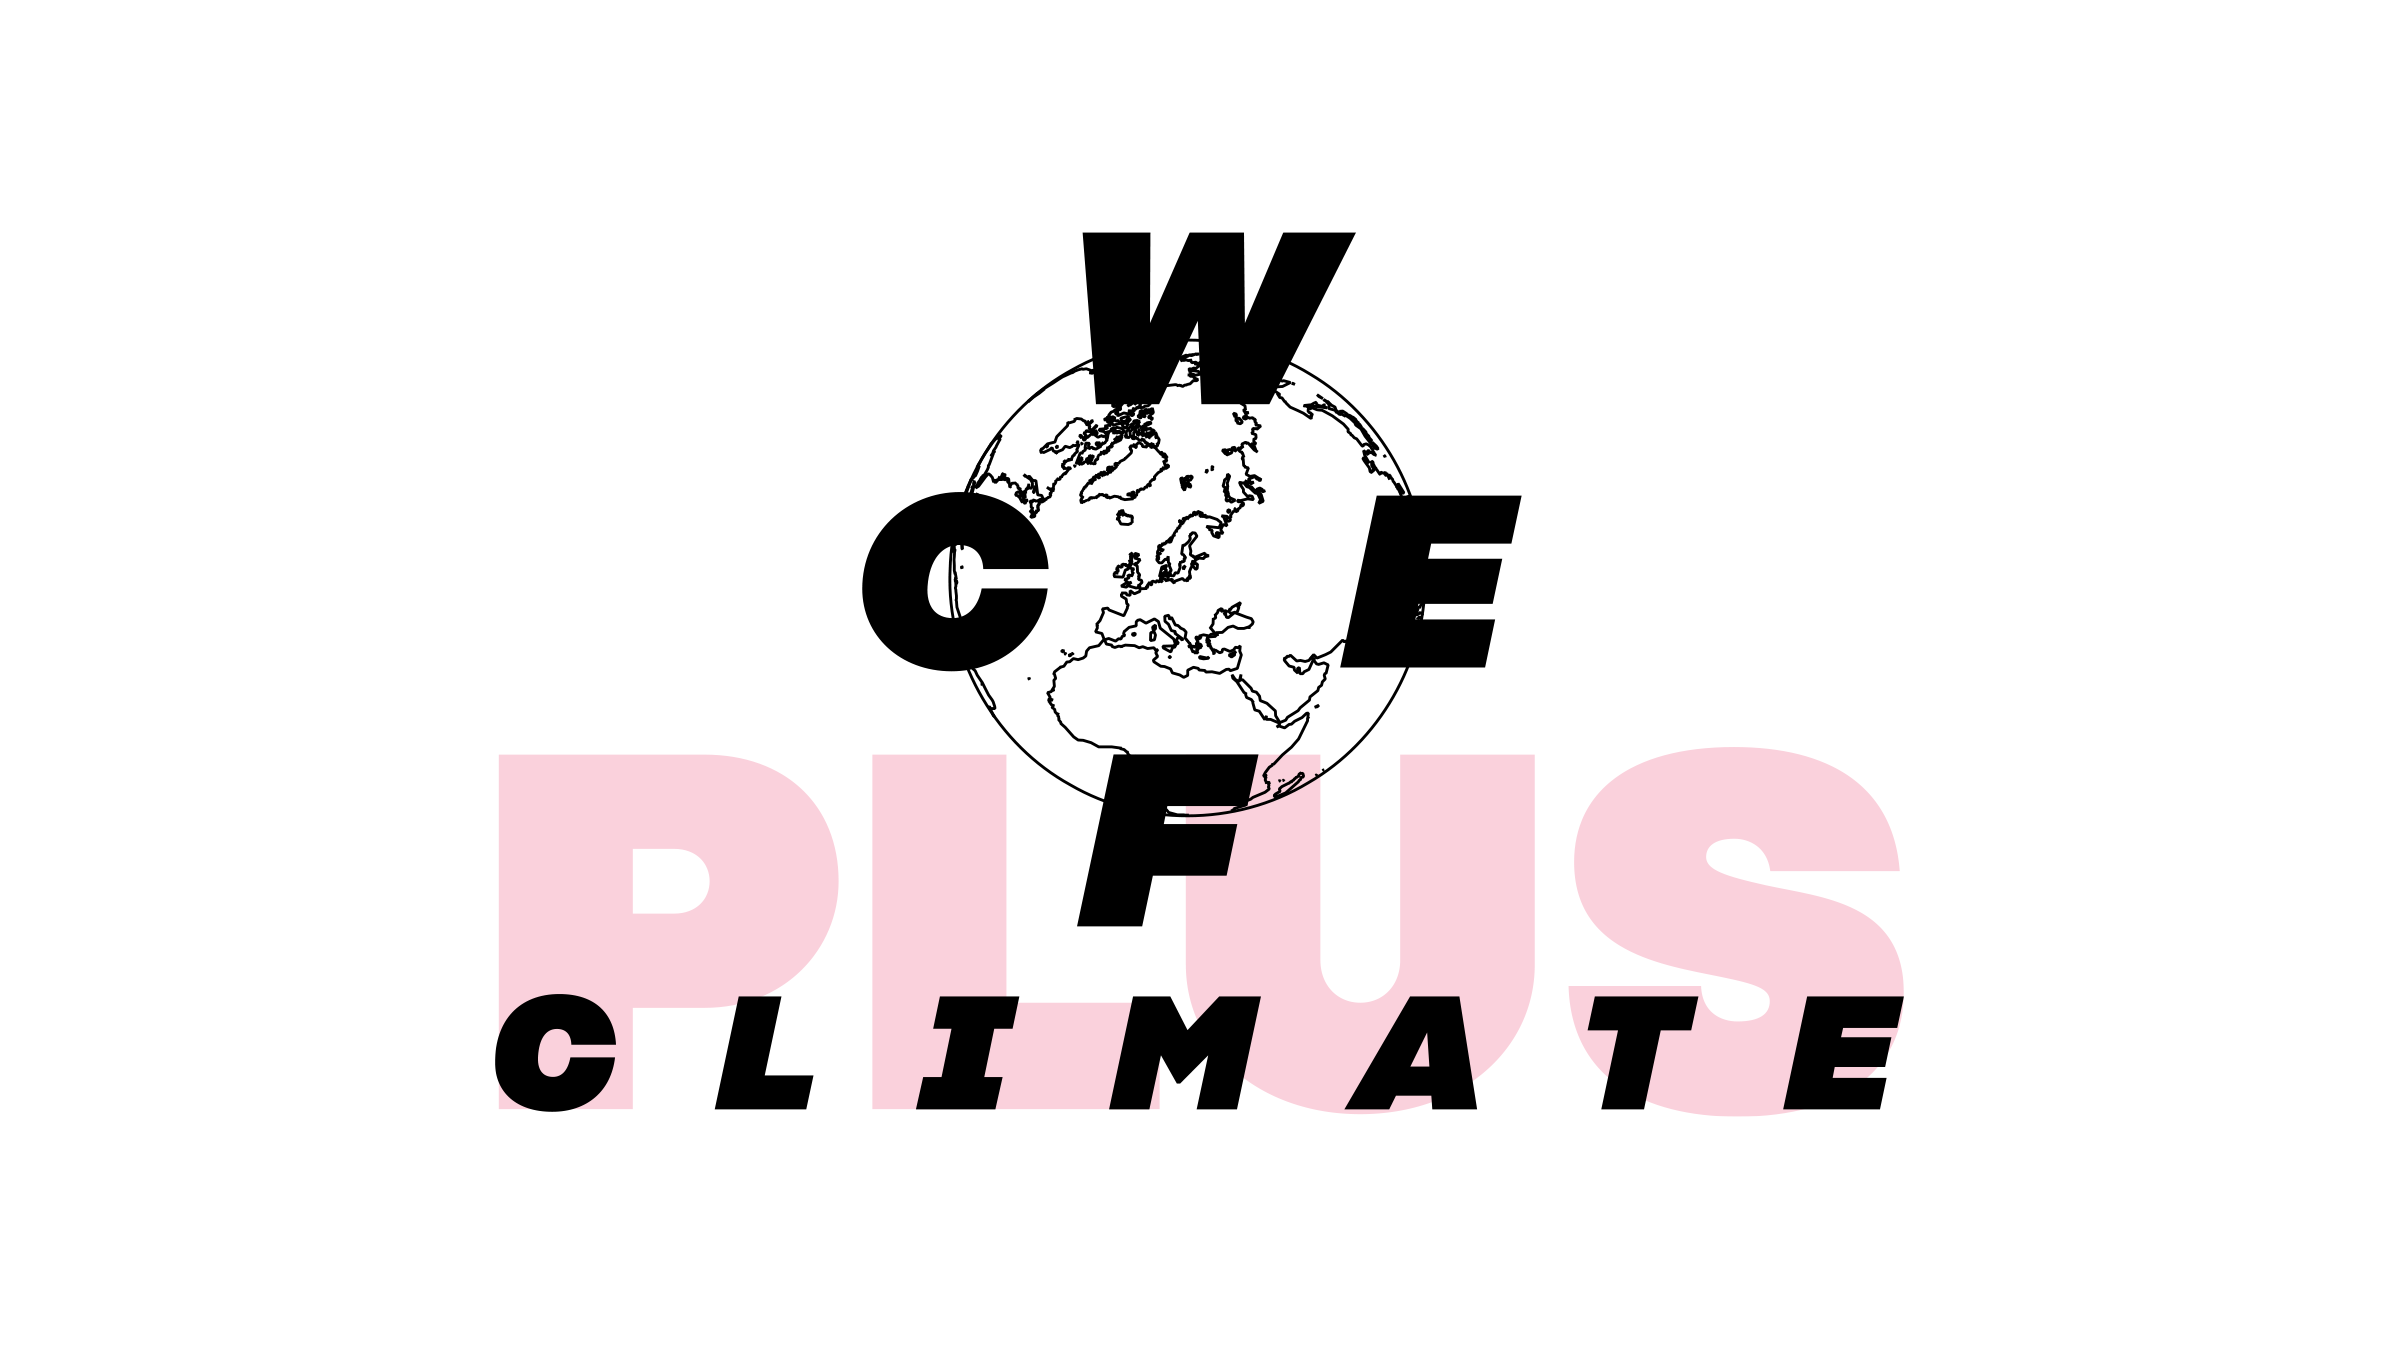 World Circular Economy Forum + Climate